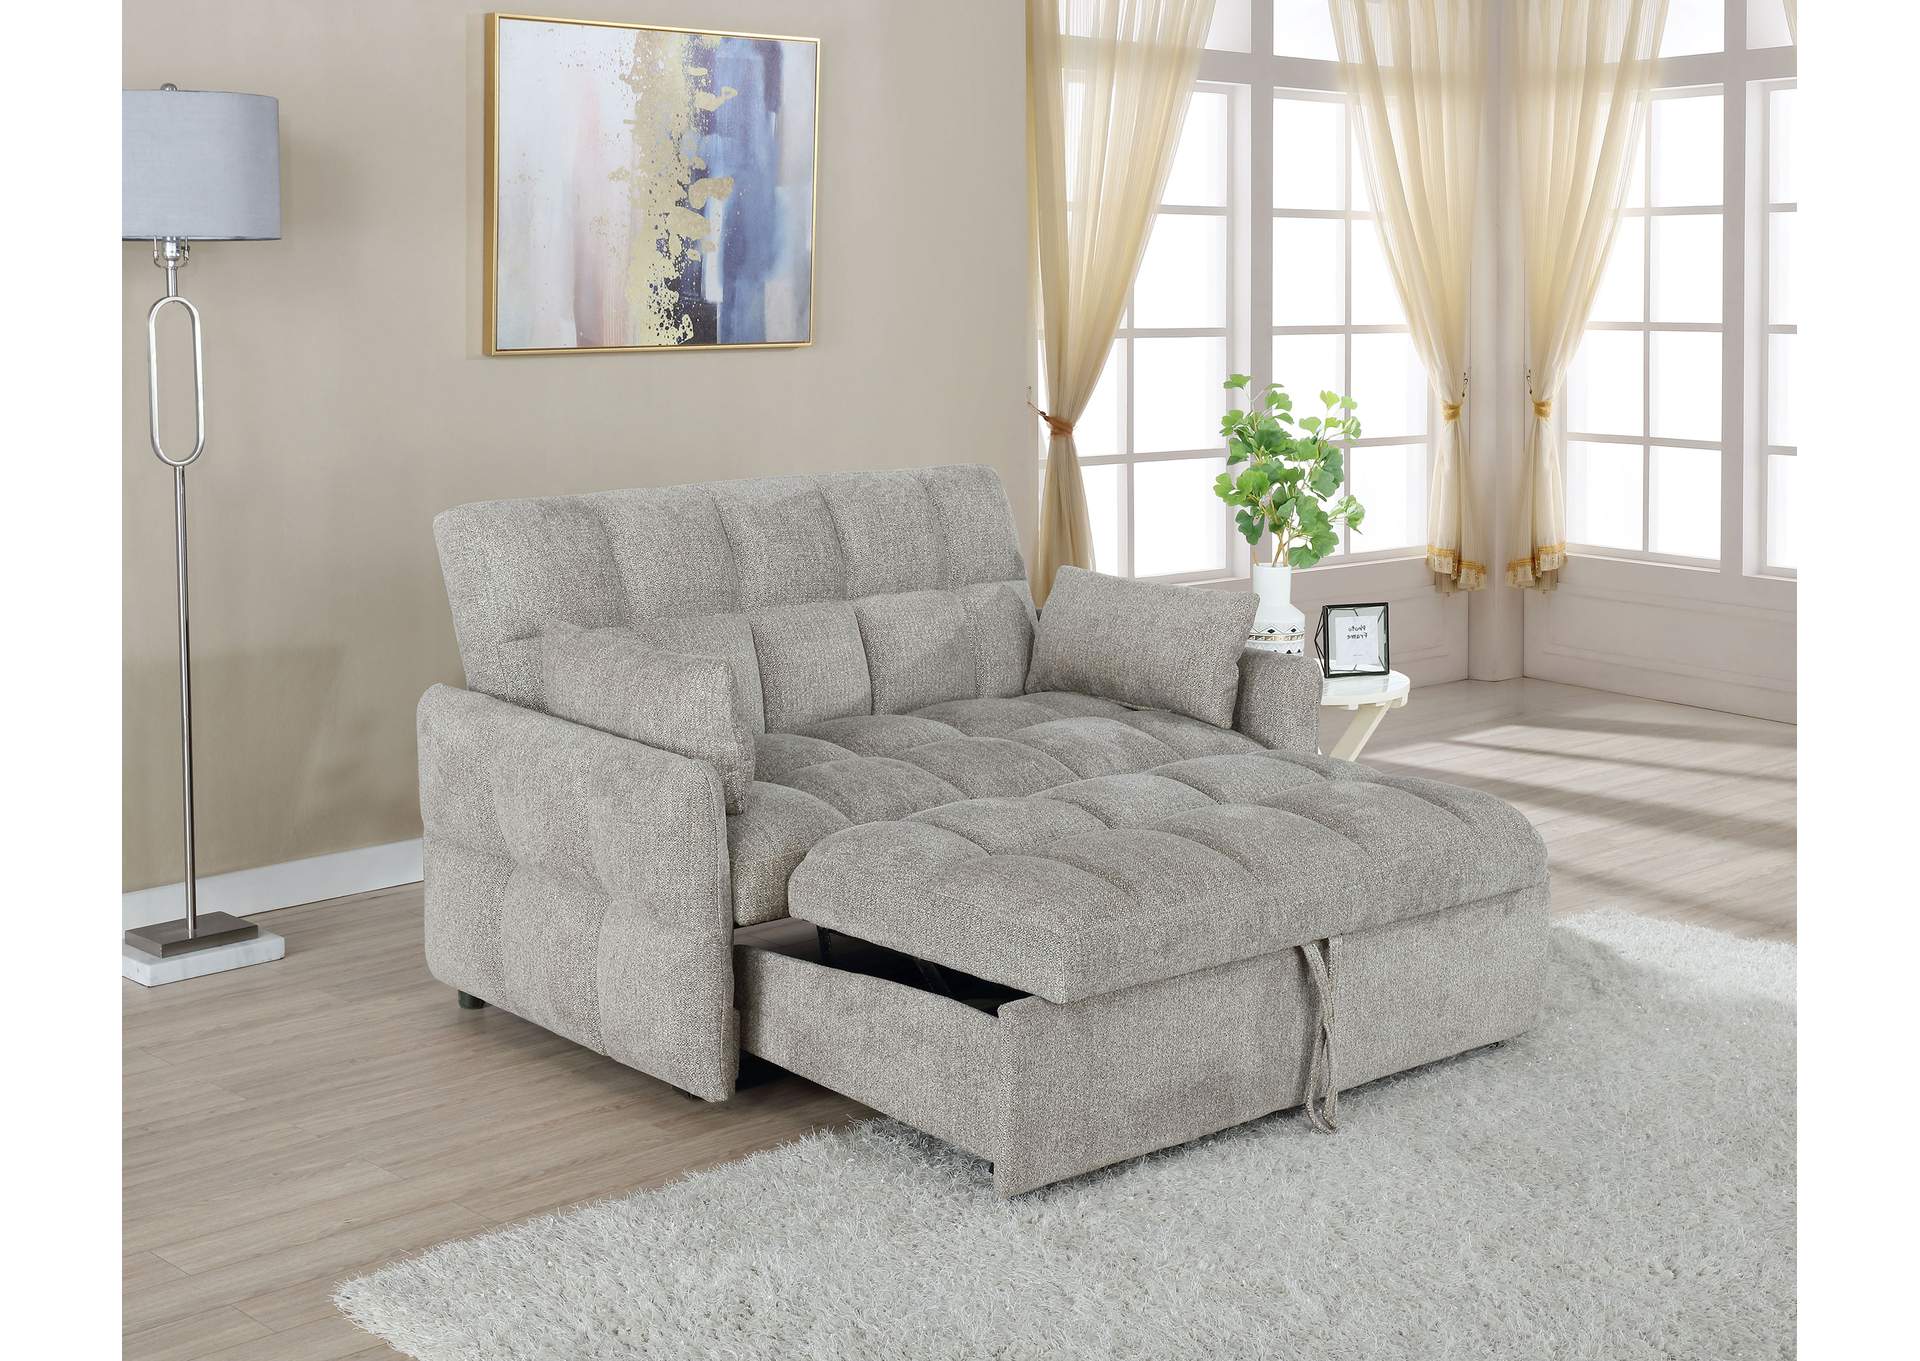 Cotswold Tufted Cushion Sleeper Sofa Bed Beige,Coaster Furniture